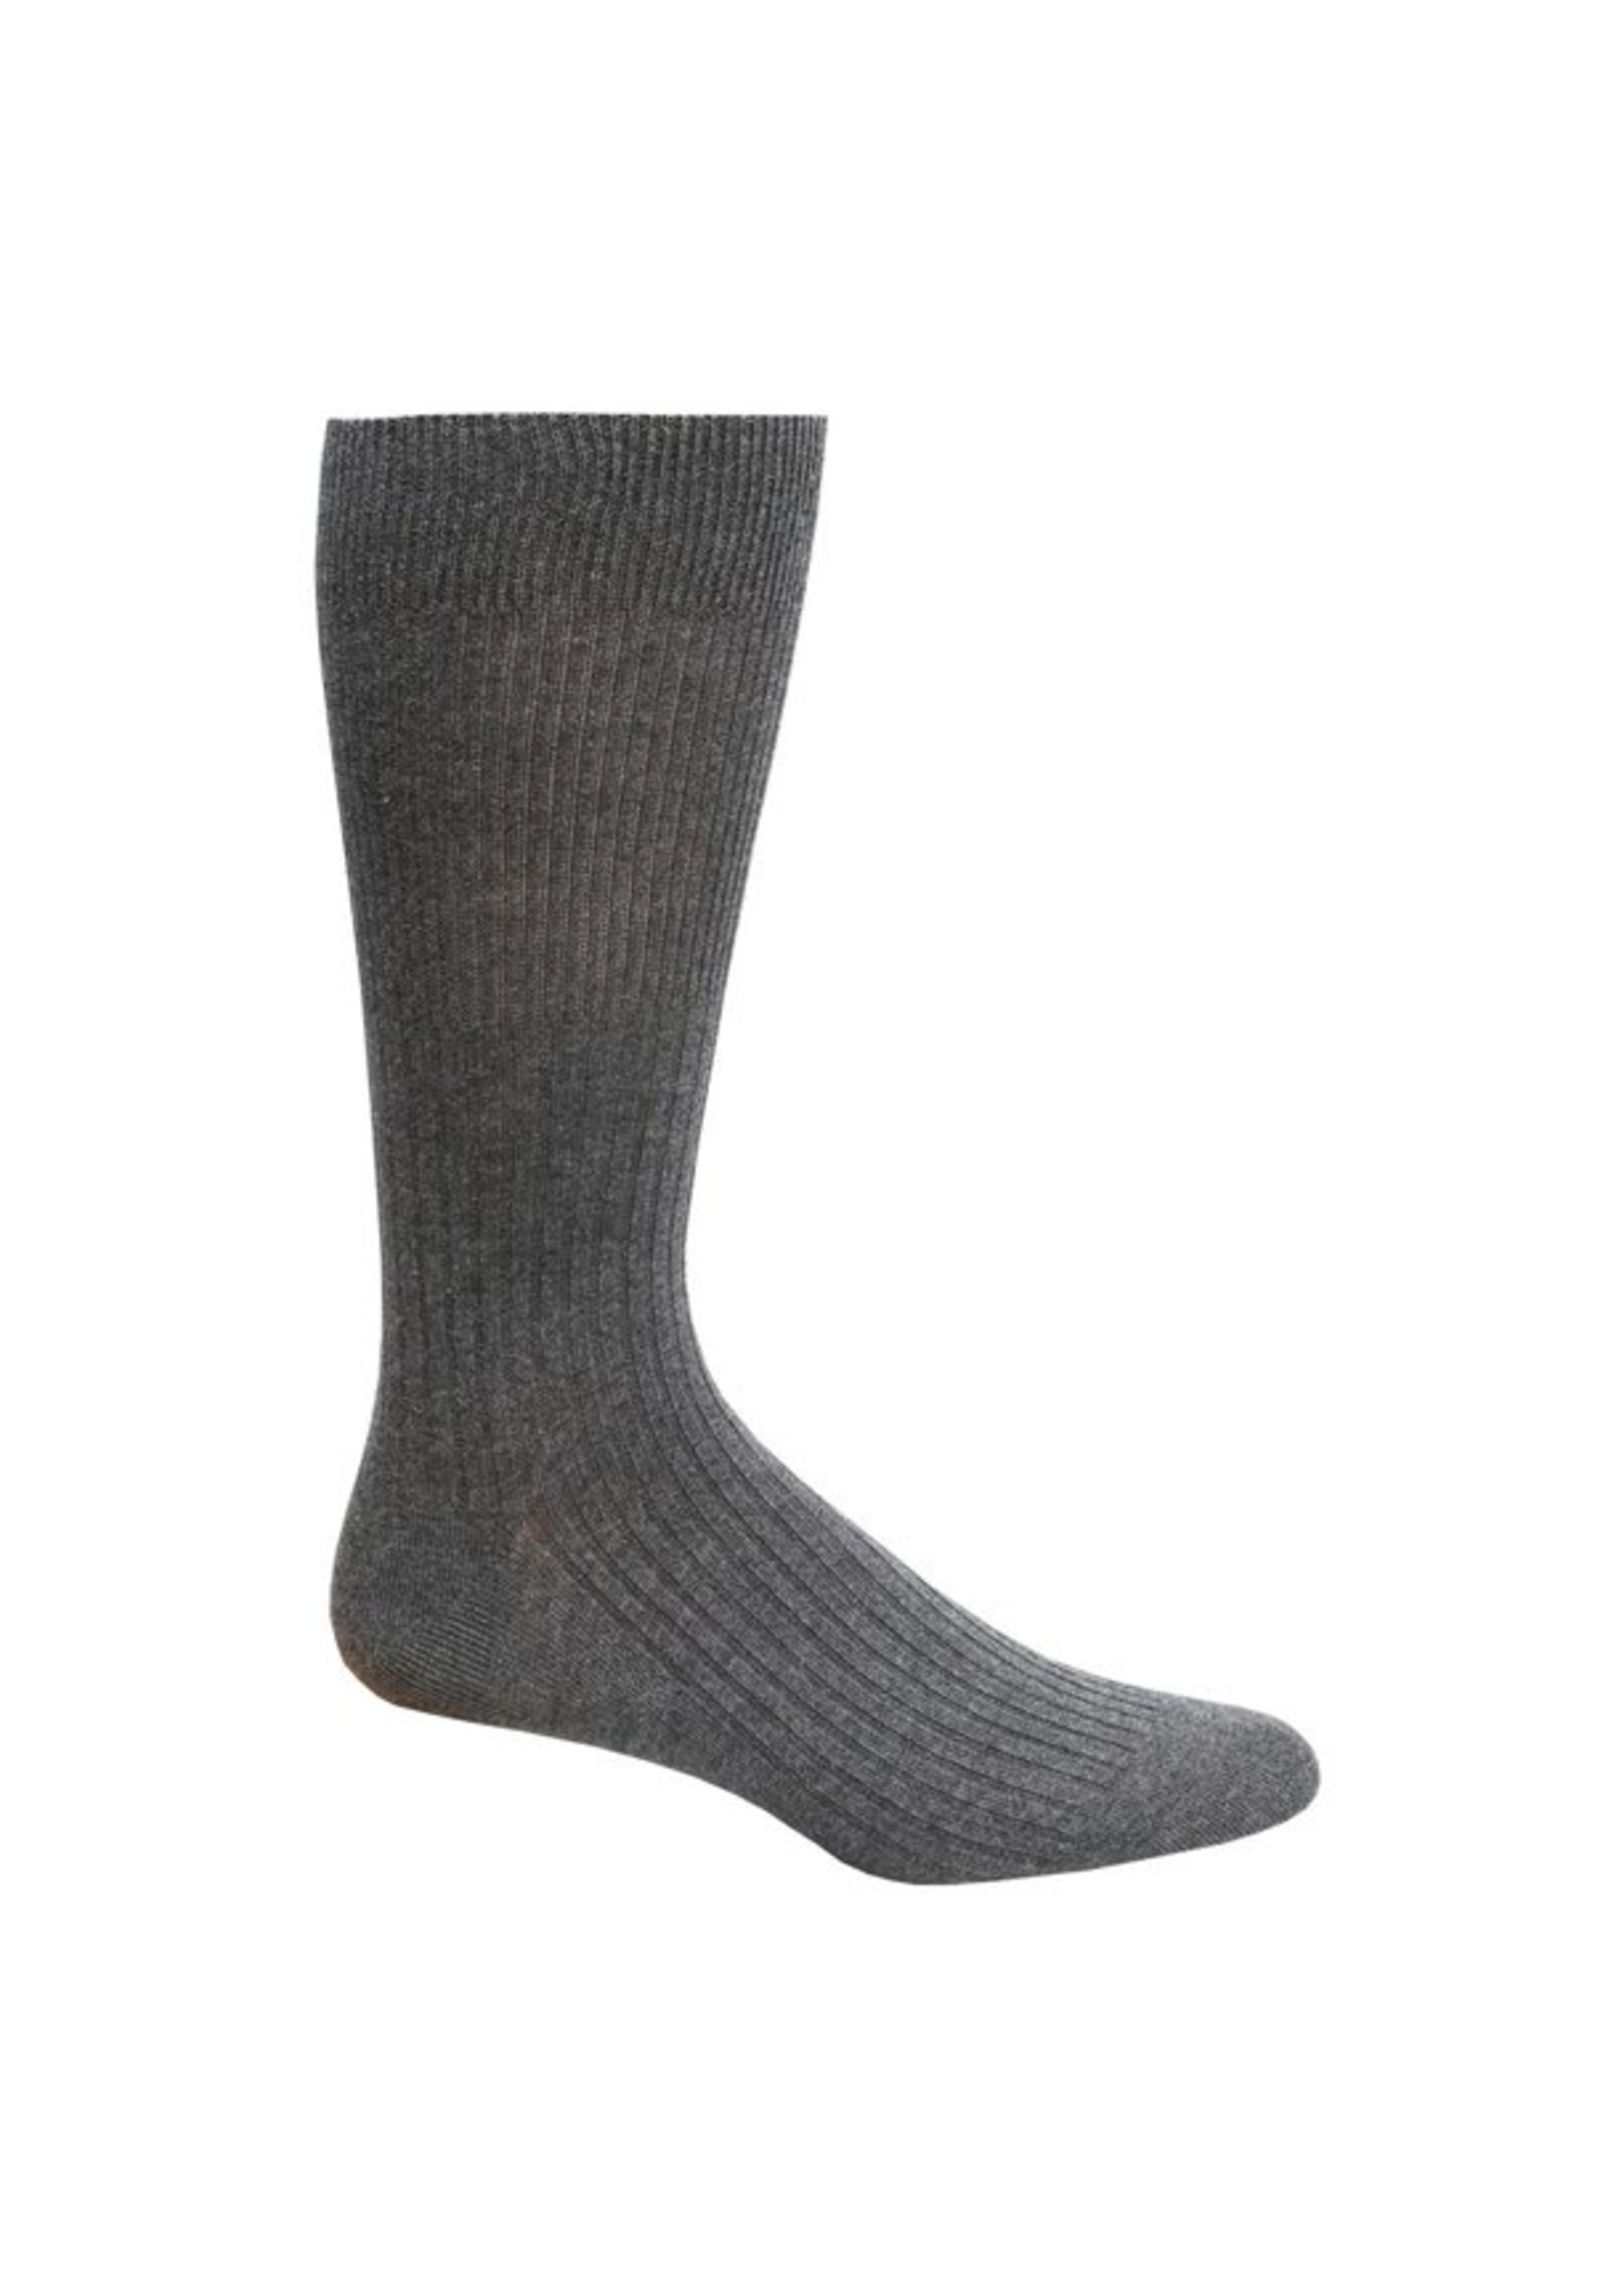 Simcan Socks Simcan's Tender Top Cotton Mid Calf Sock